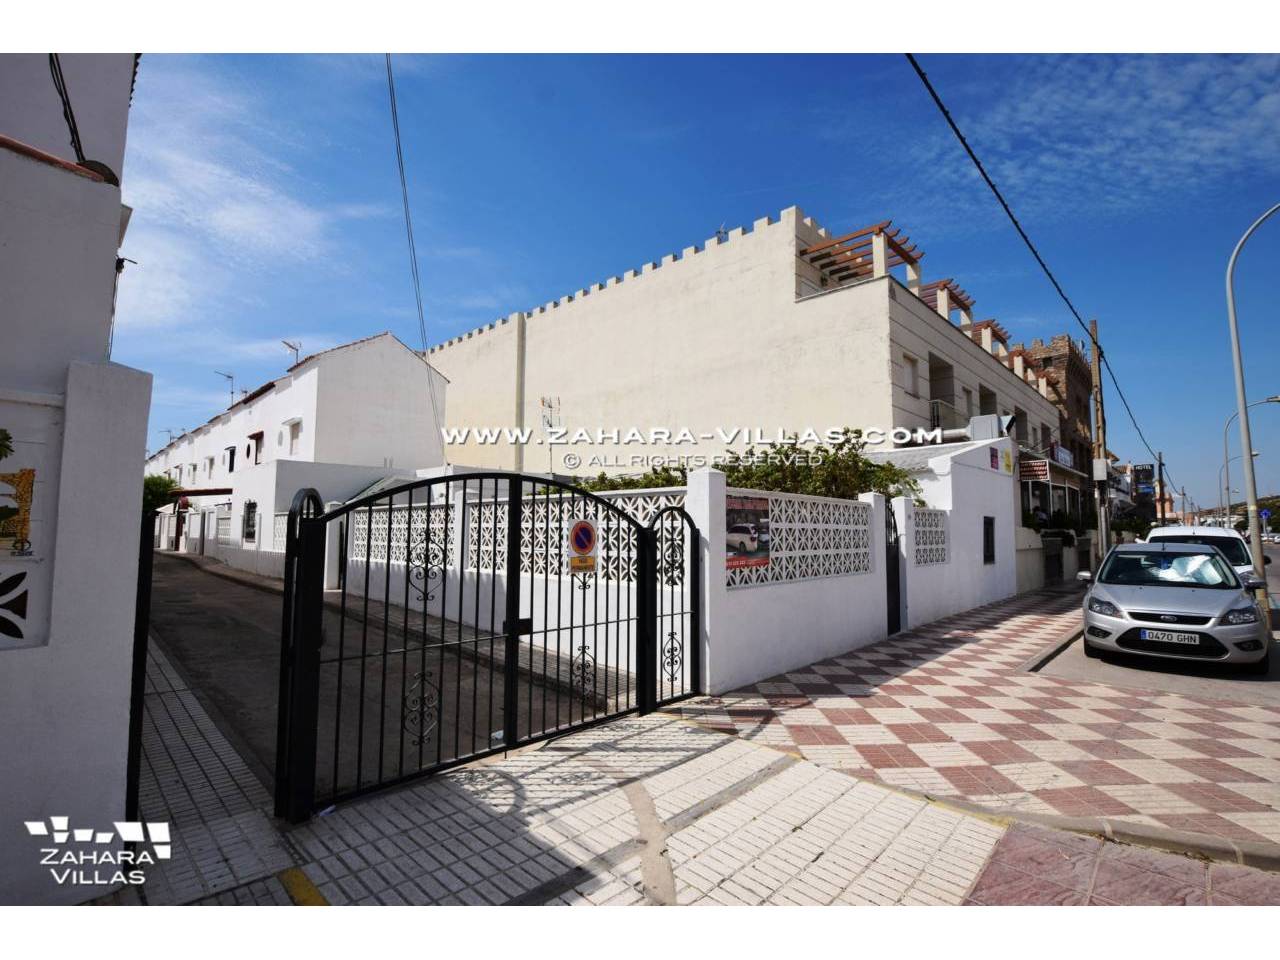 Imagen 19 de House in Avda. Del Pradillo for sale in the town of Zahara de los Atunes